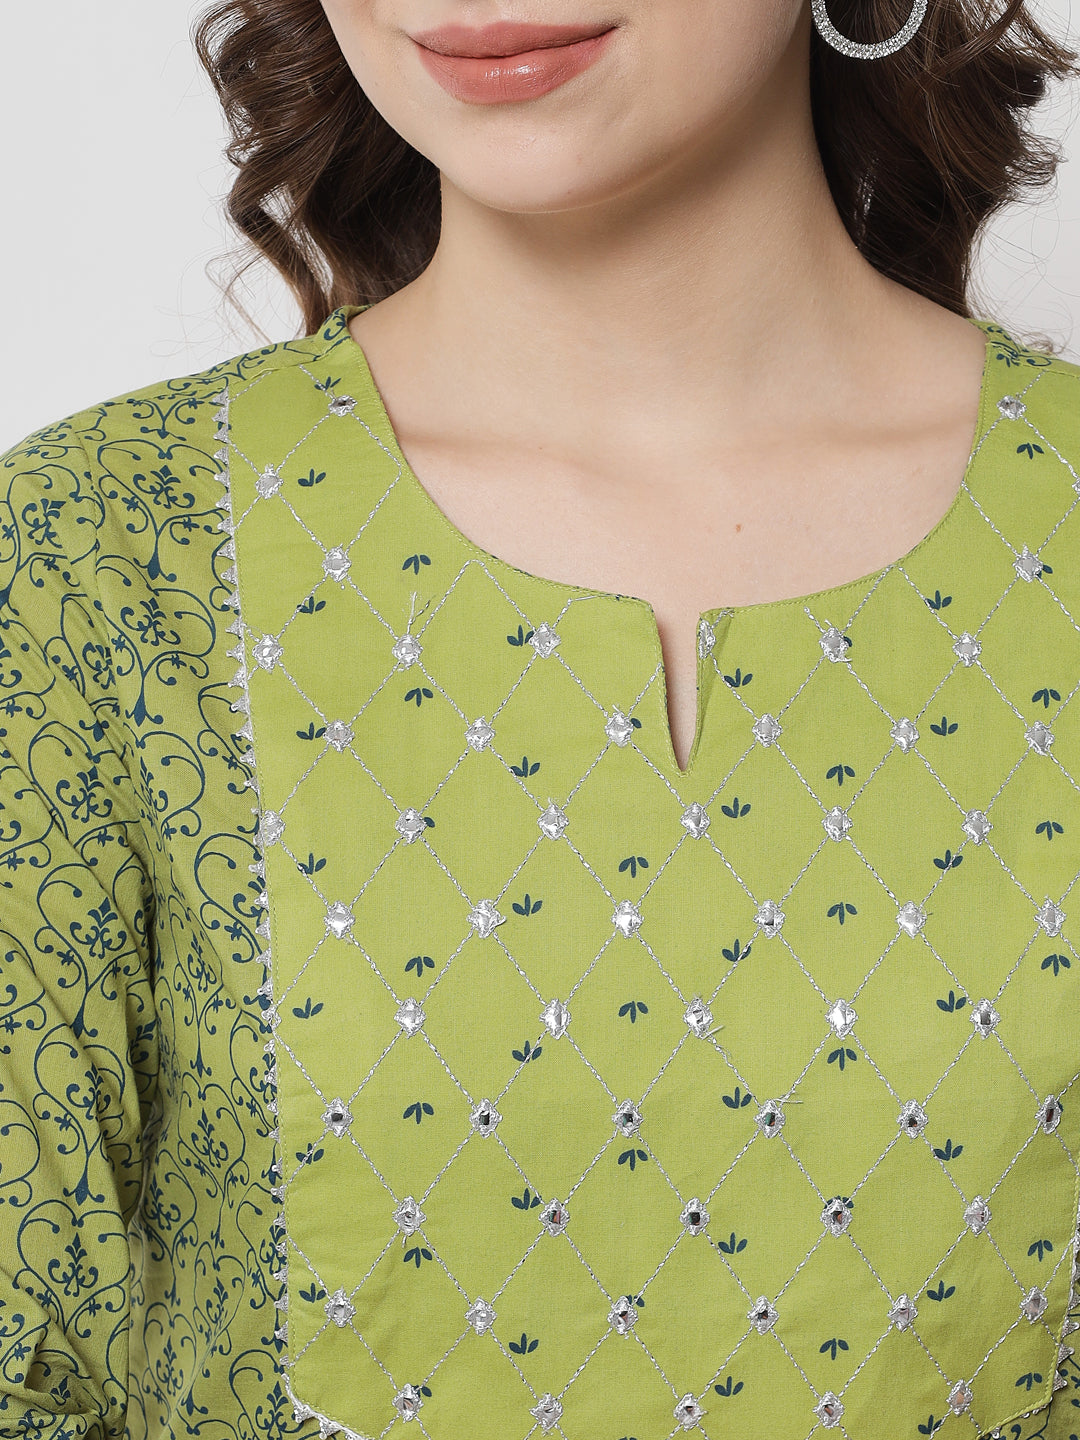 Women's Lime Green Printed Yoke Zari Embroidered Kurta With Trousers  - Meeranshi